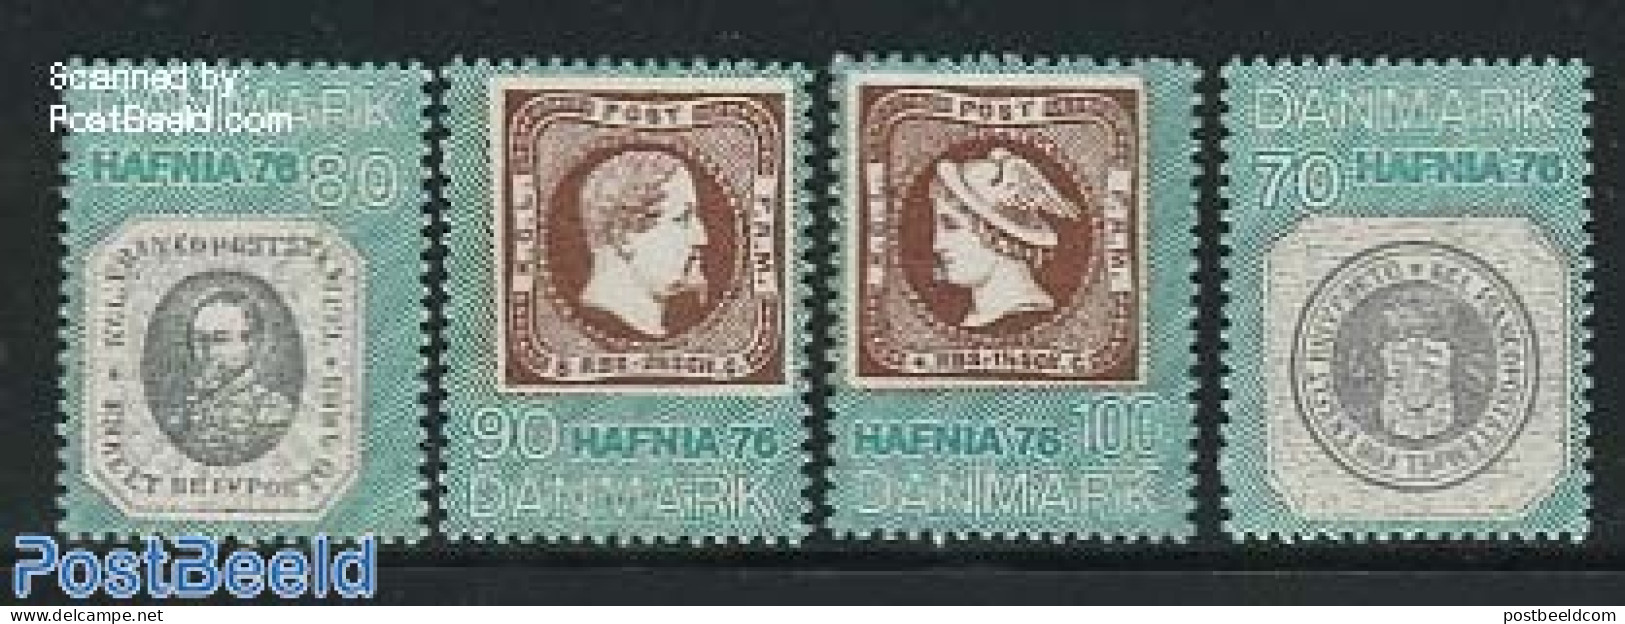 Denmark 1975 Hafnia 76 4v, Mint NH, Stamps On Stamps - Neufs